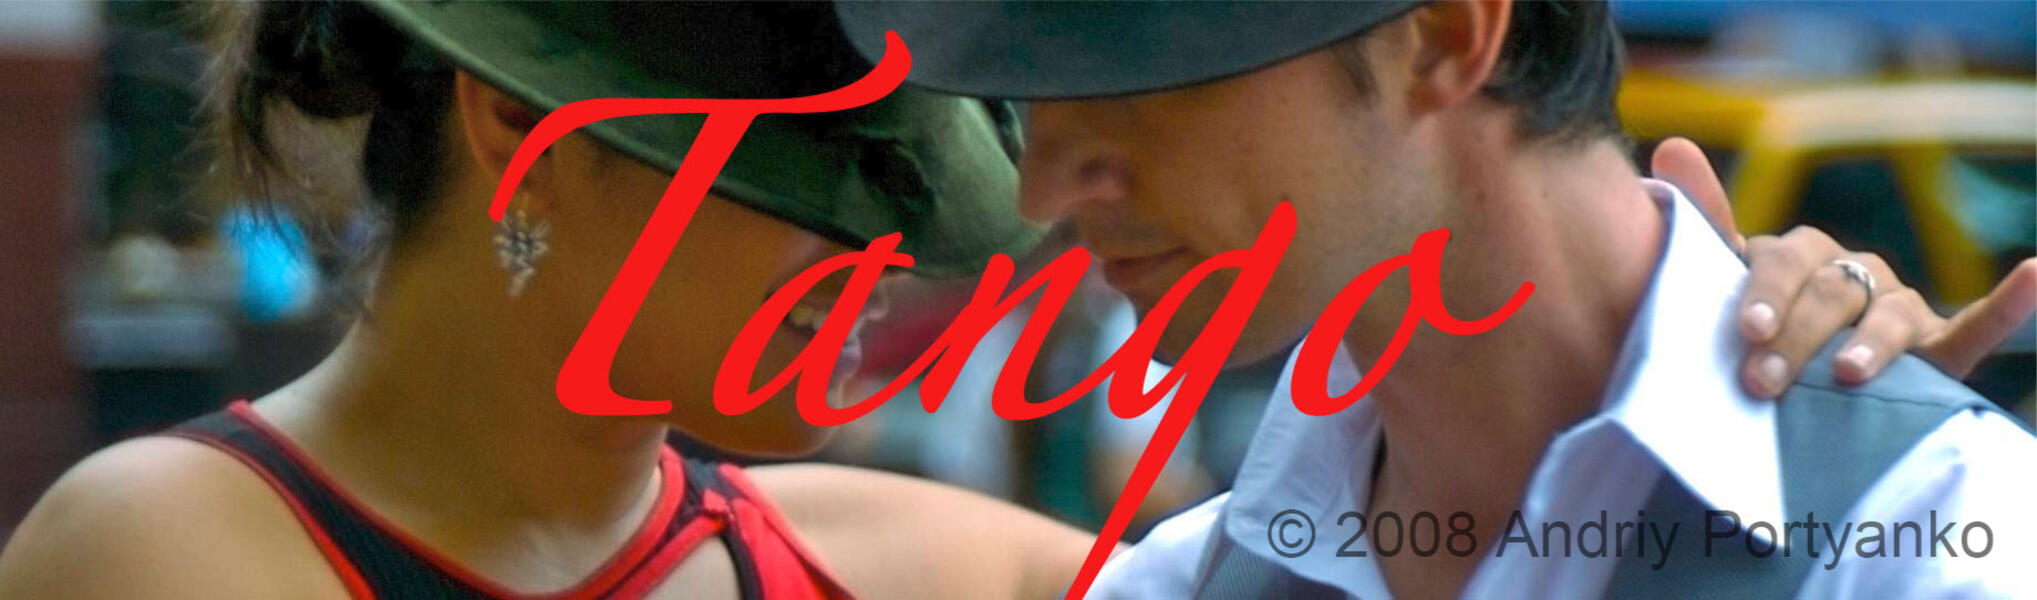 Tango1